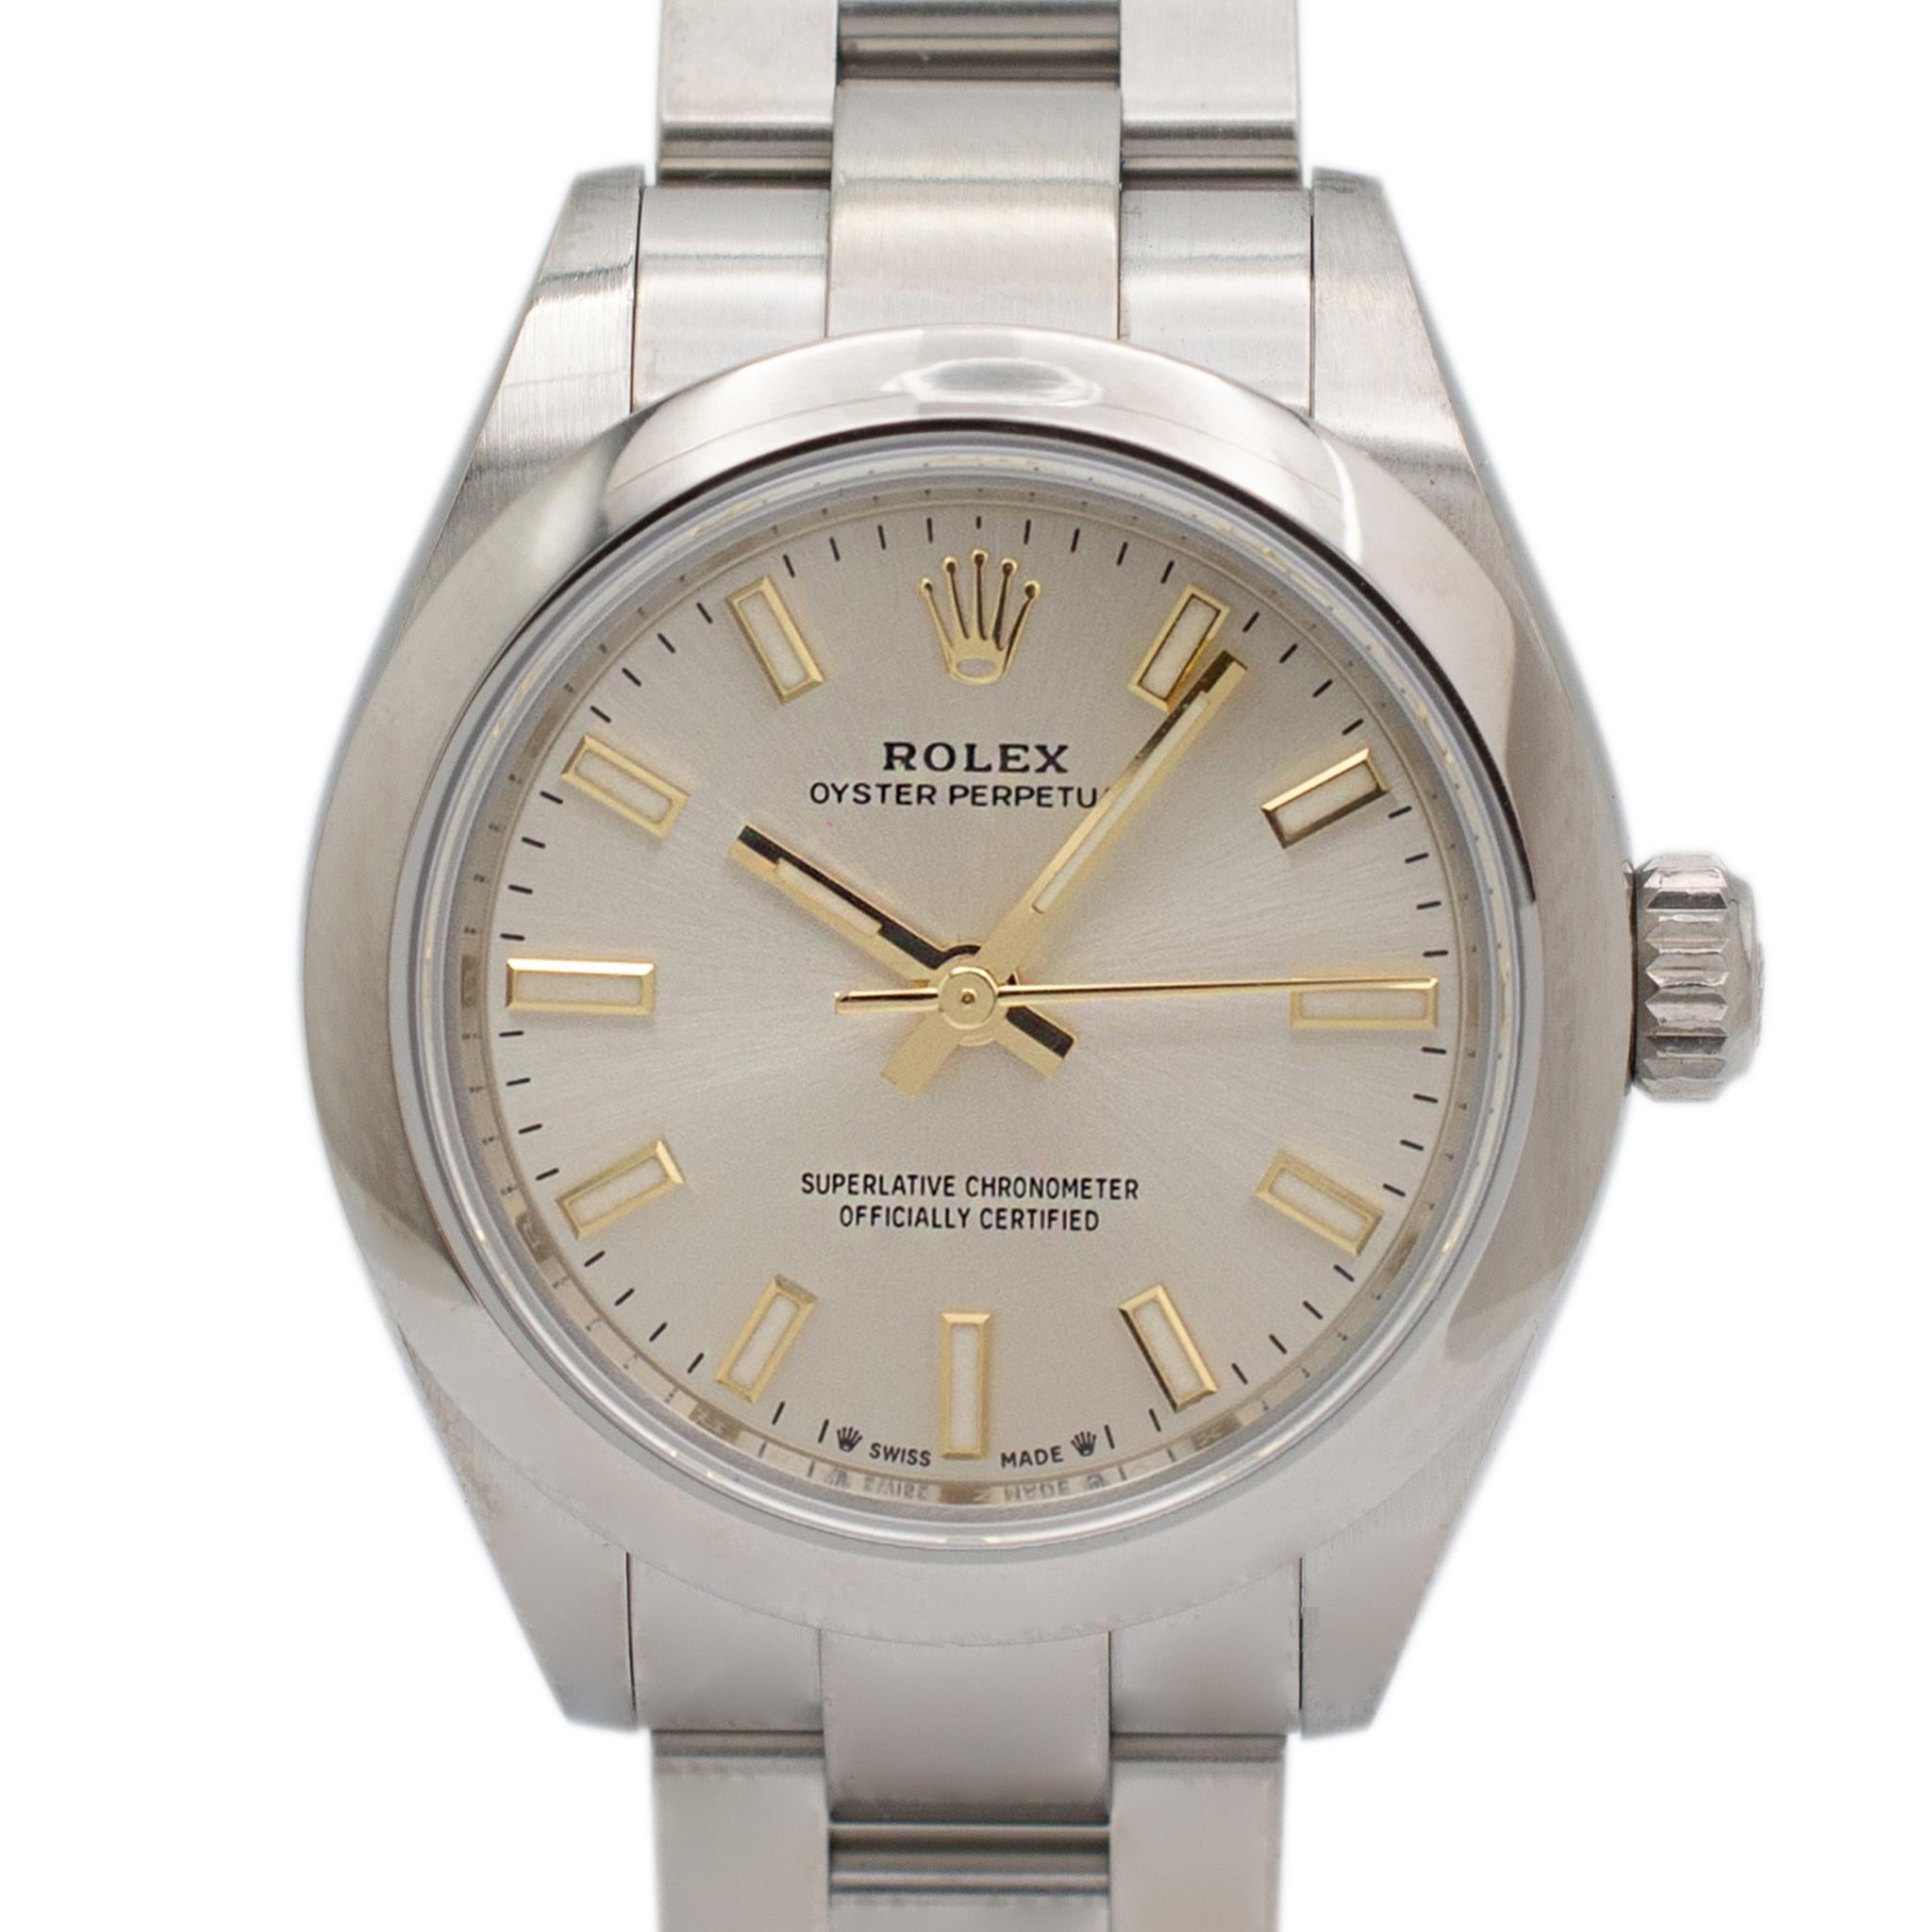 Brand: Rolex
Case Diameter: 28mm
Total Weight: 76.78 grams

Ladies stainless steel, Rolex Swiss watch. The 